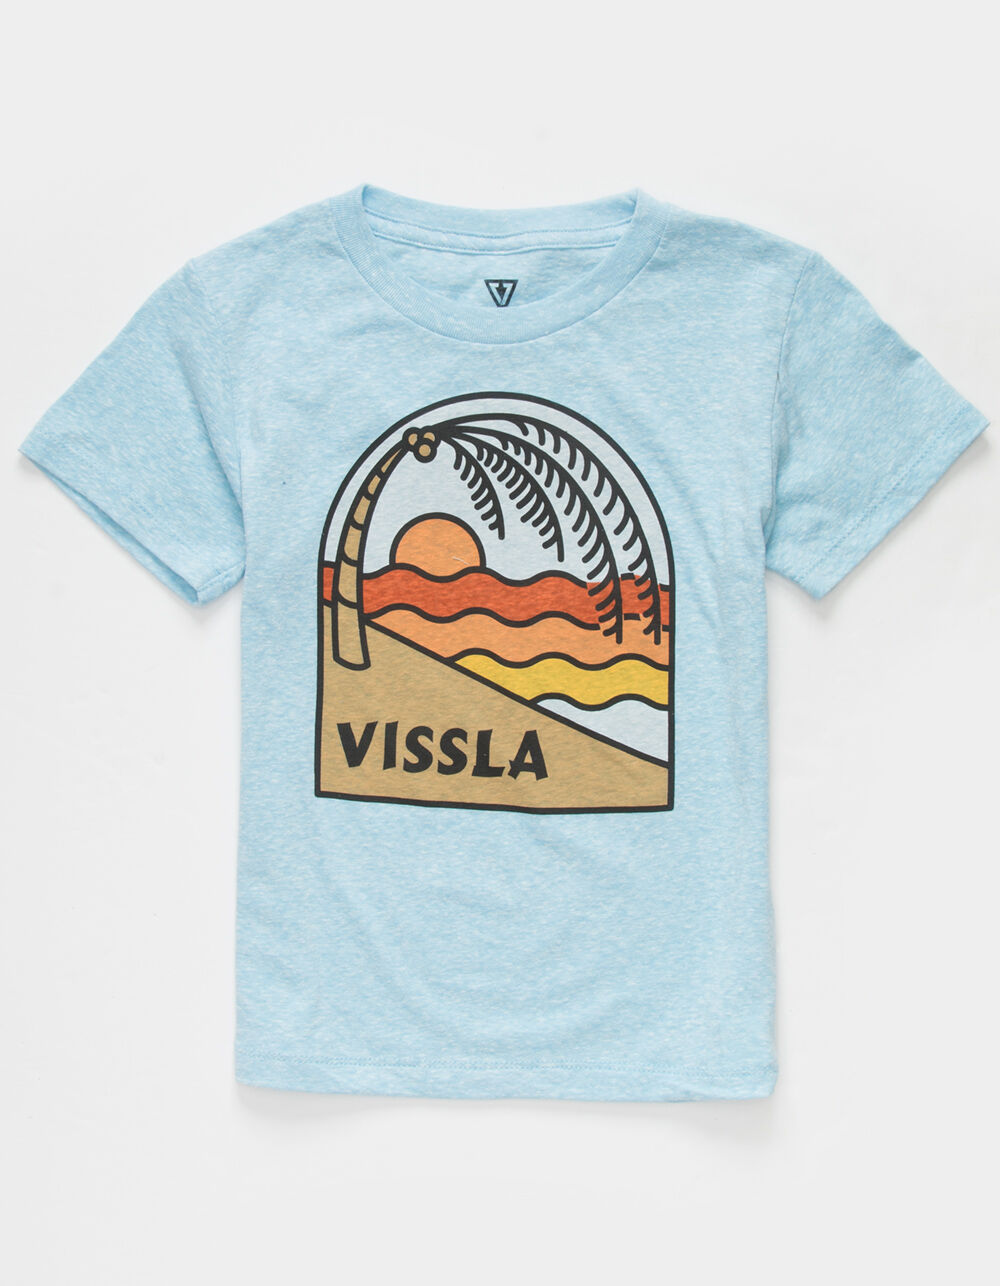 VISSLA Stoke Island Little Boys T-Shirt (4-7) - LIGHT BLUE | Tillys